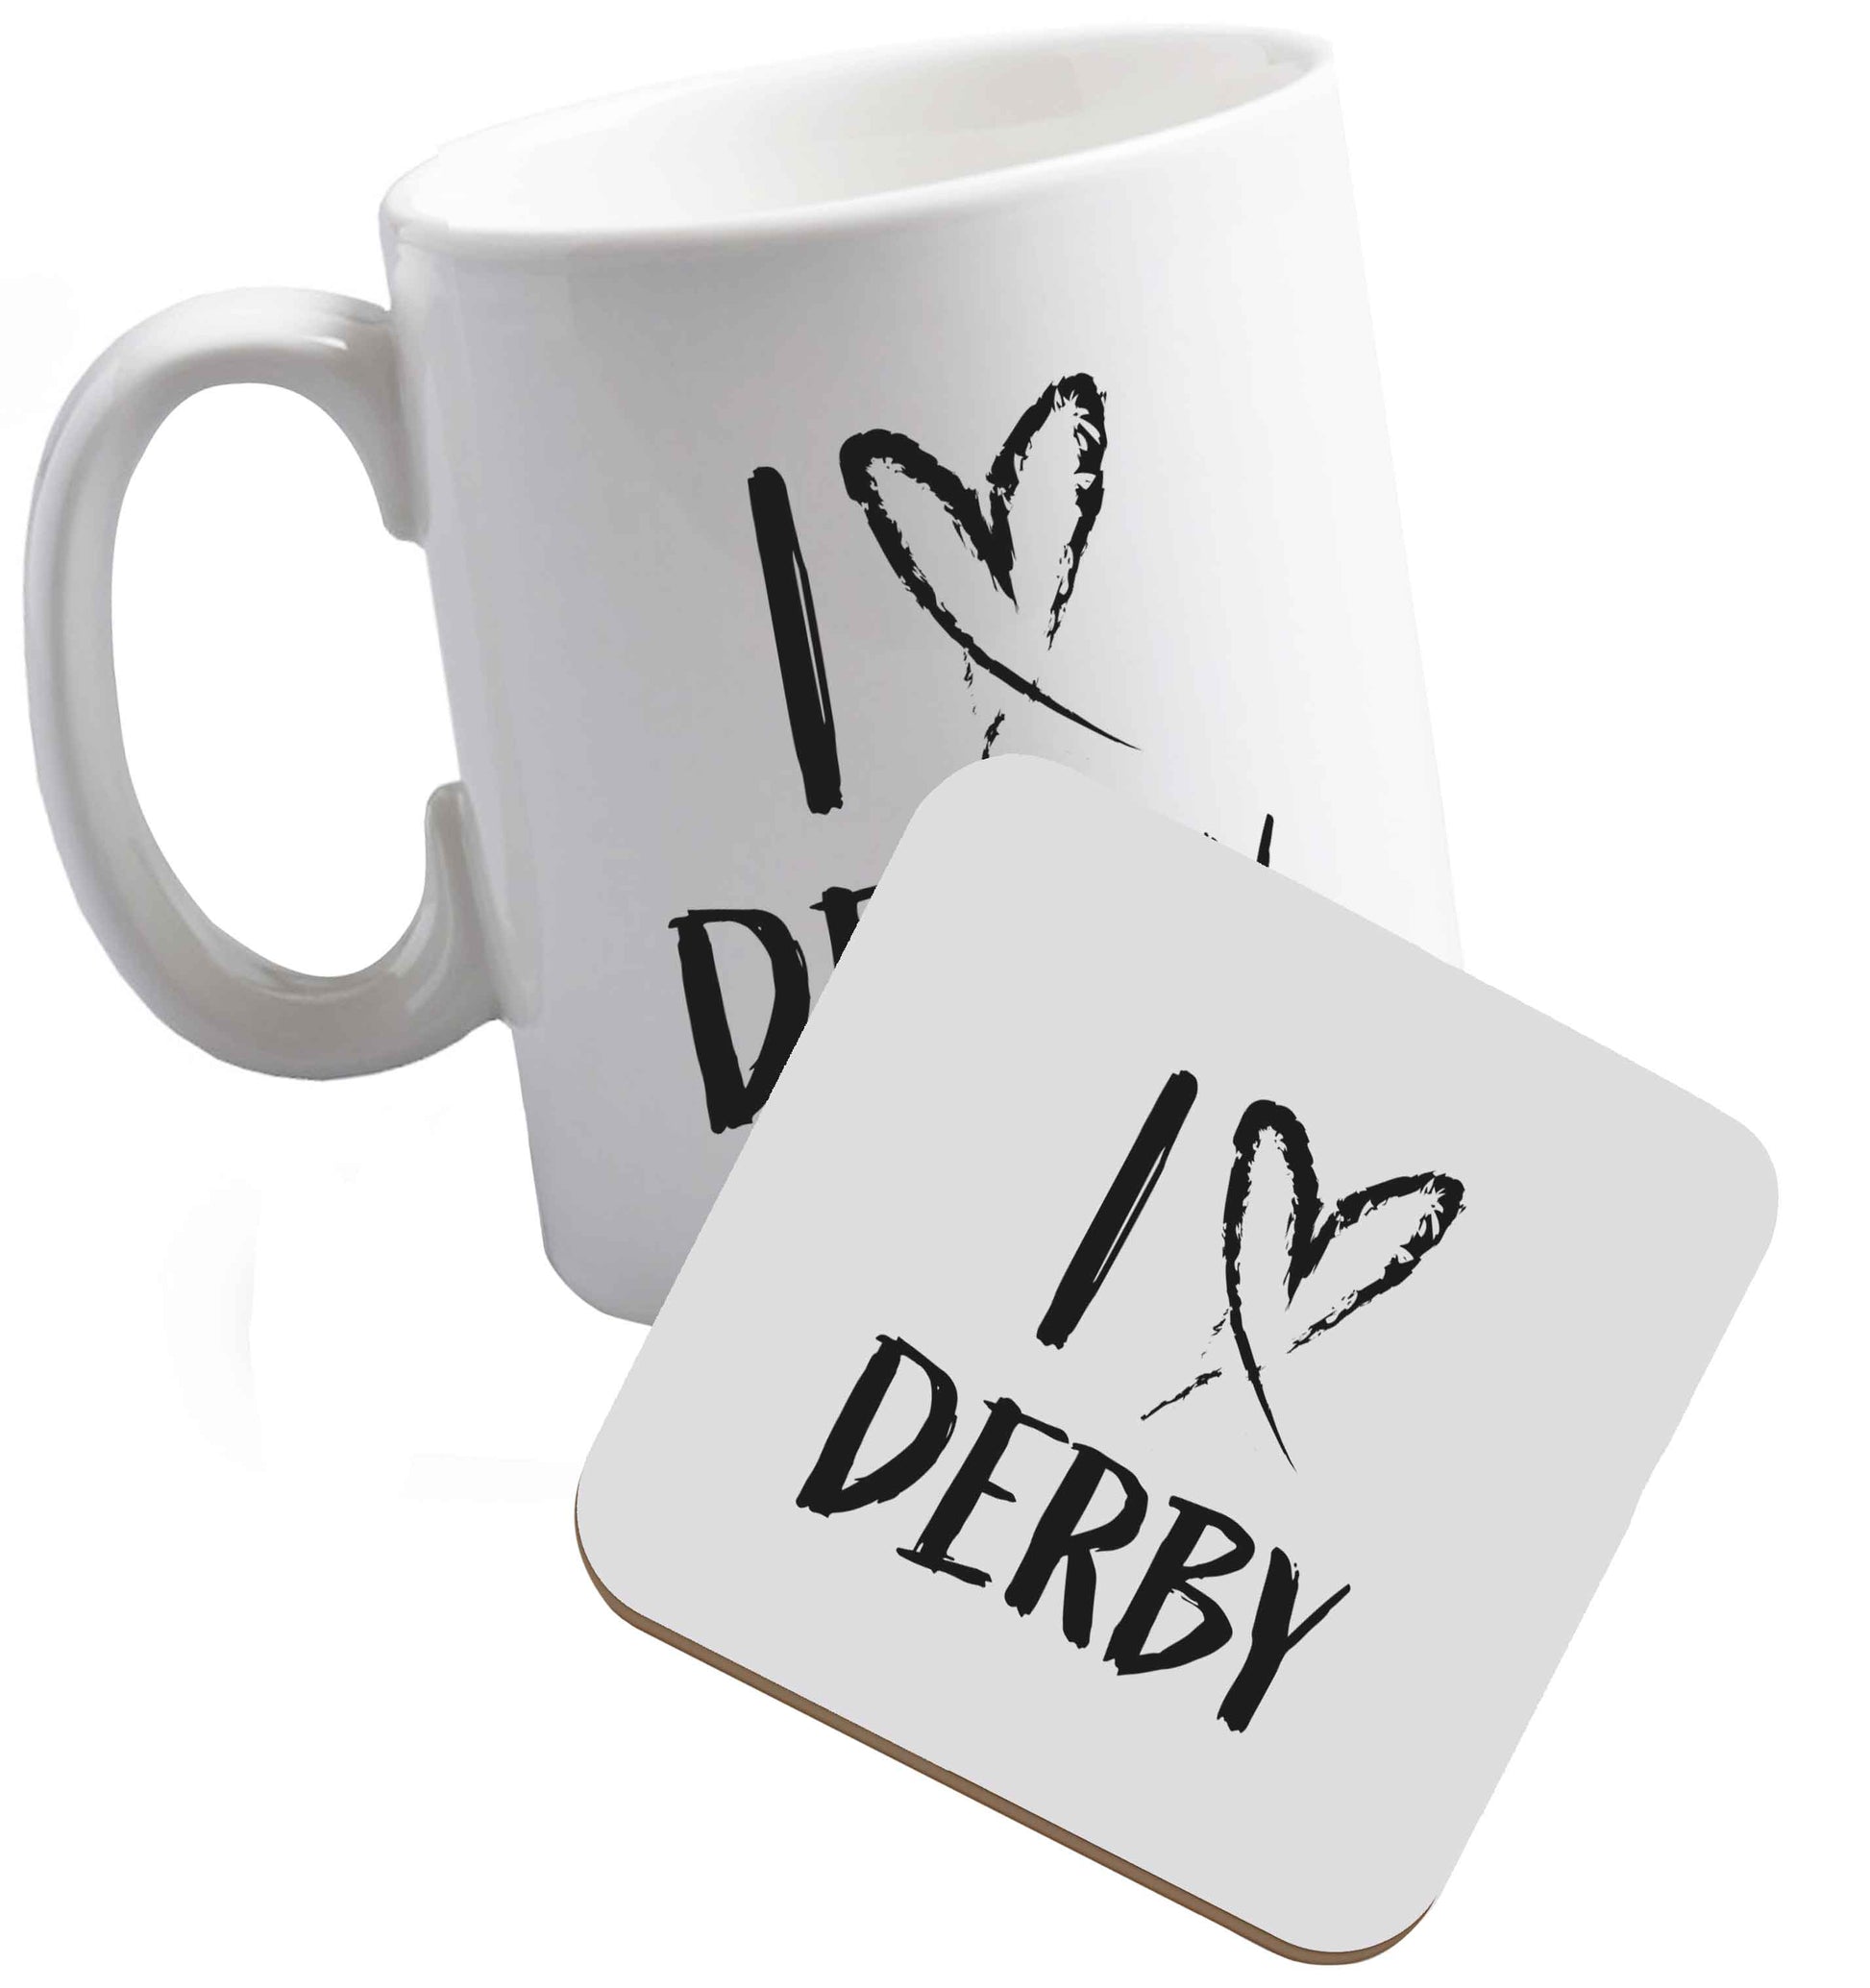 10 oz I love Derby ceramic mug and coaster set right handed